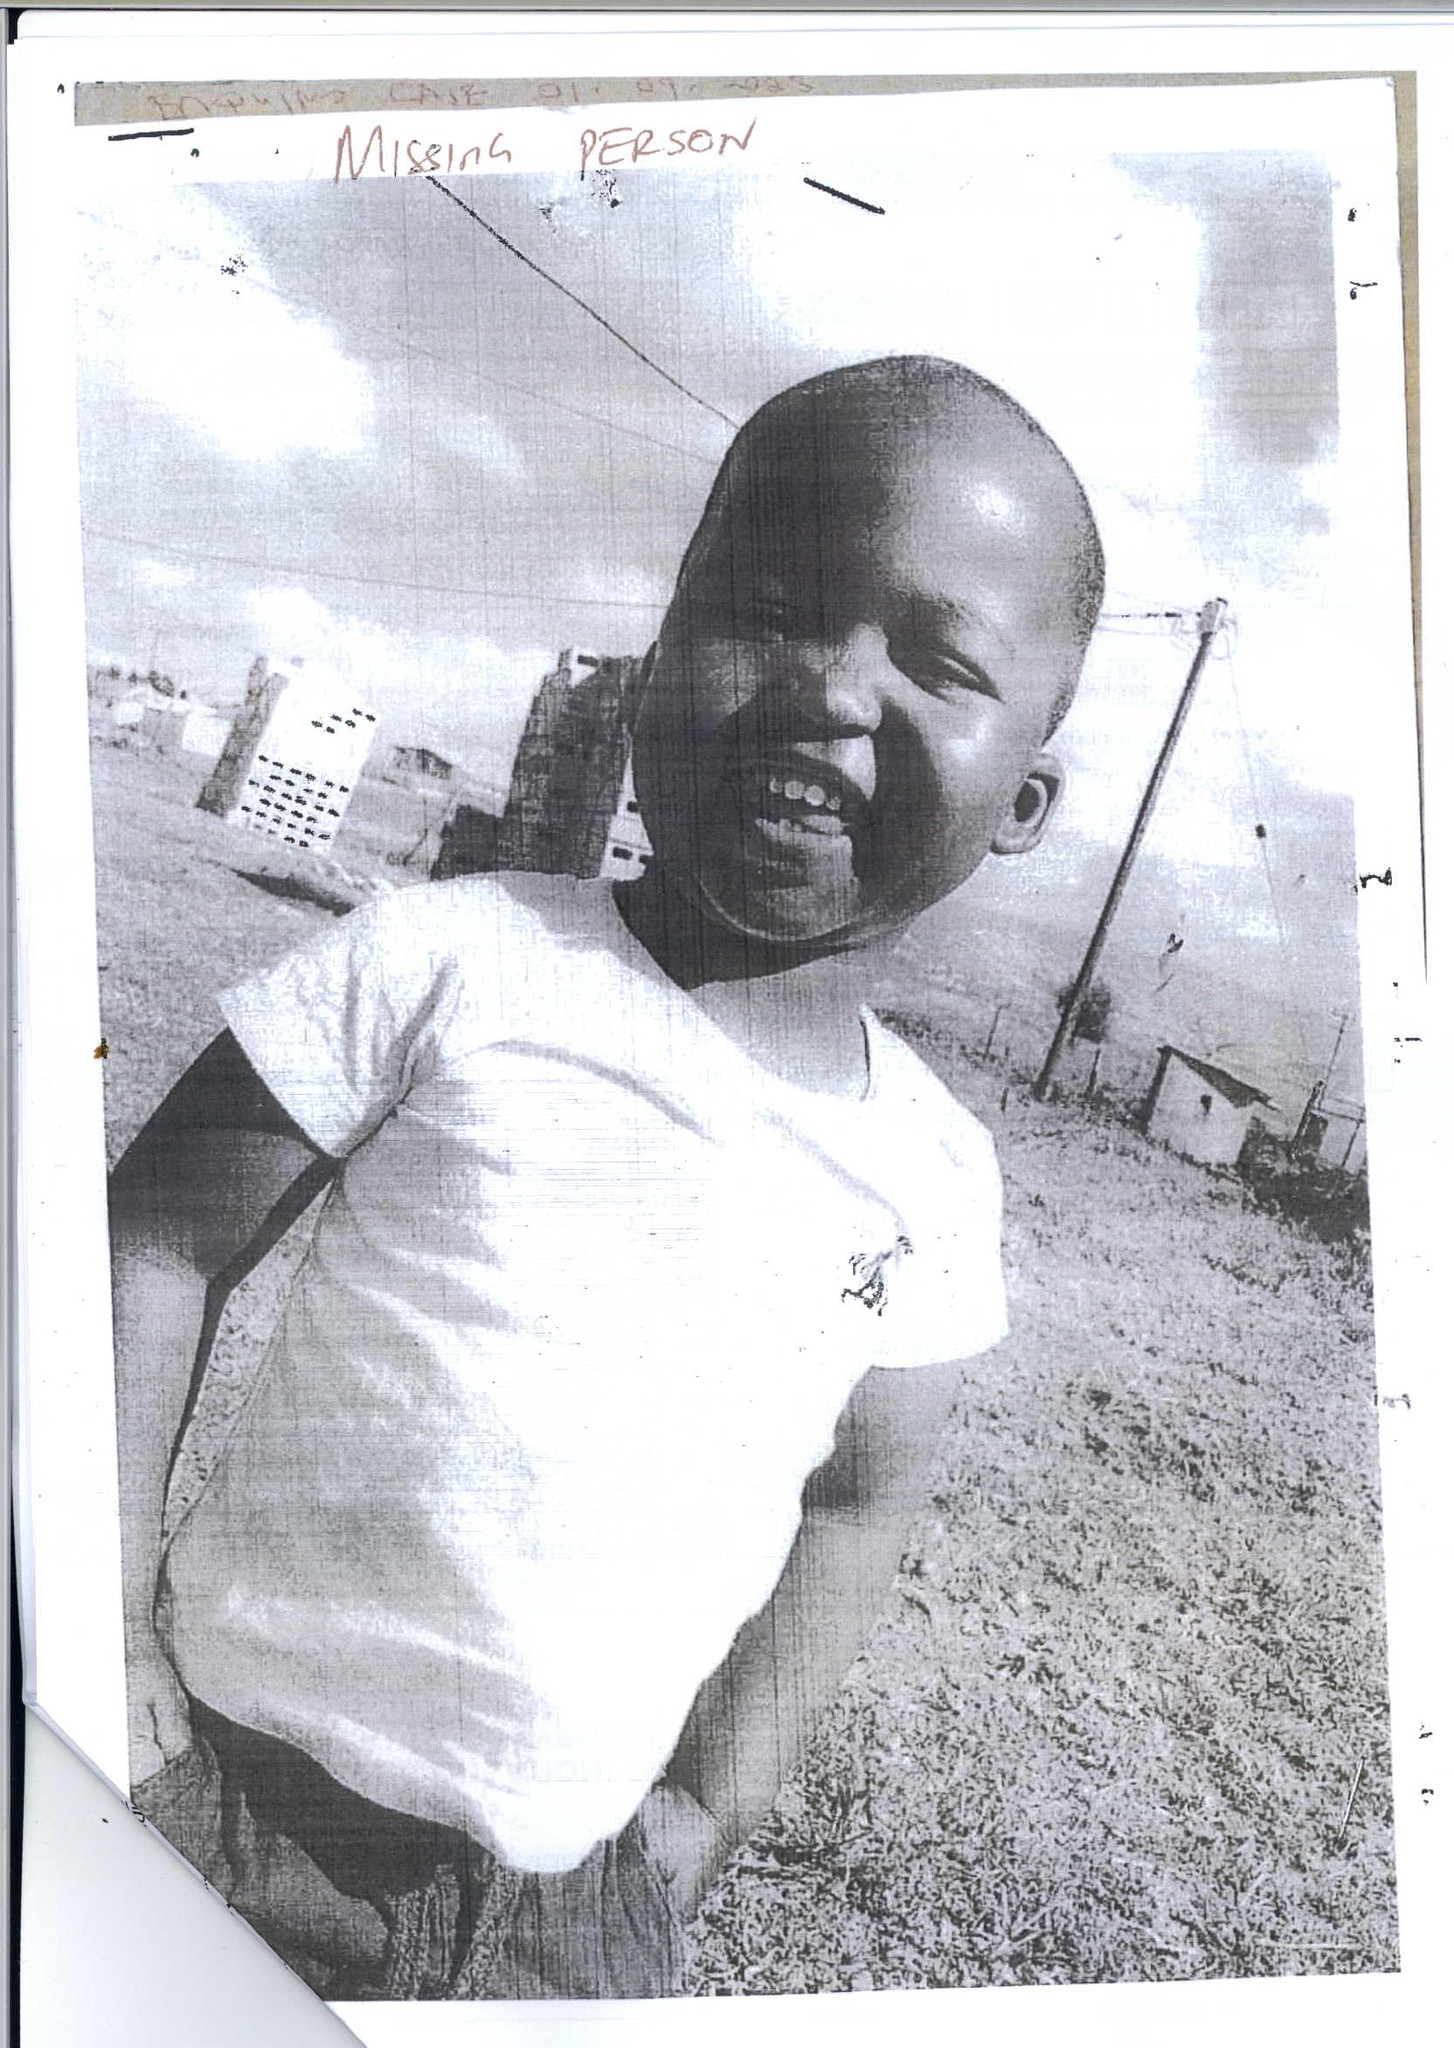 Search for missing 2-year-old Luzelwande Lubanzi Mhize from Esimpisini Homestead, Kwazulu-Natal